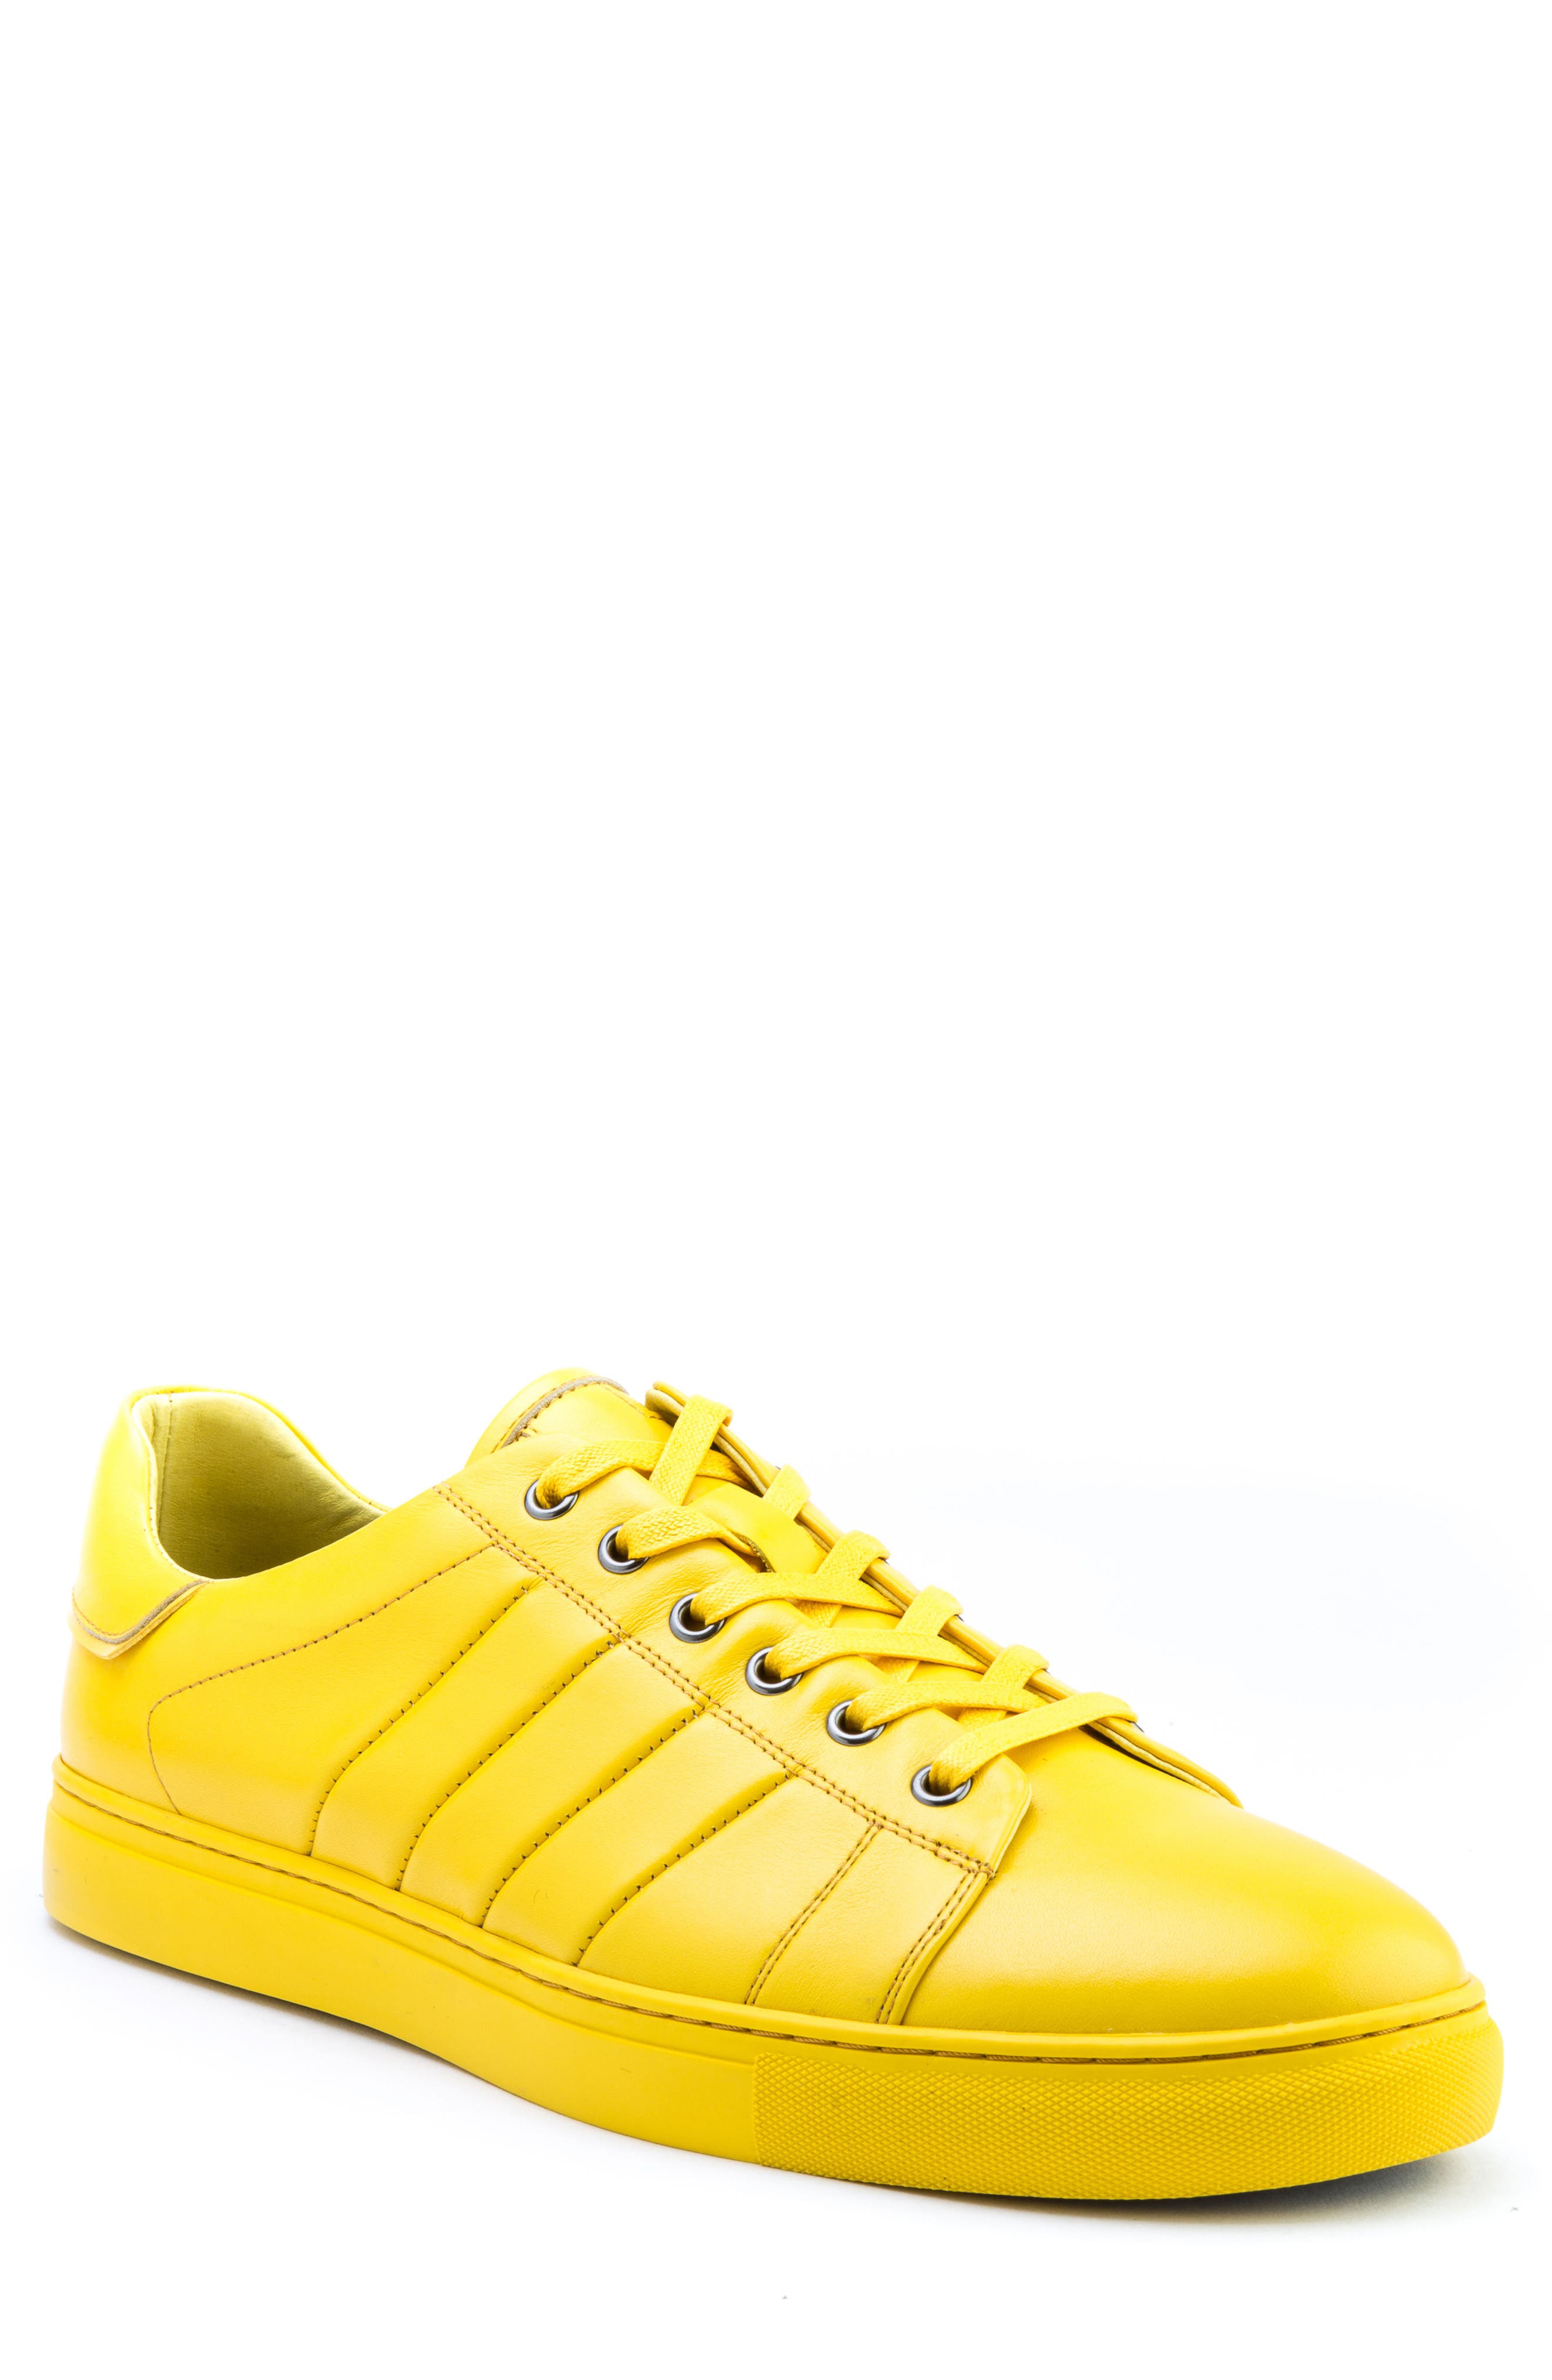 badgley mischka yellow shoes